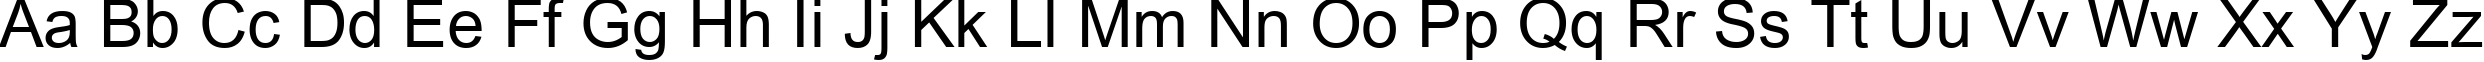 Пример написания английского алфавита шрифтом Arial Unicode MS